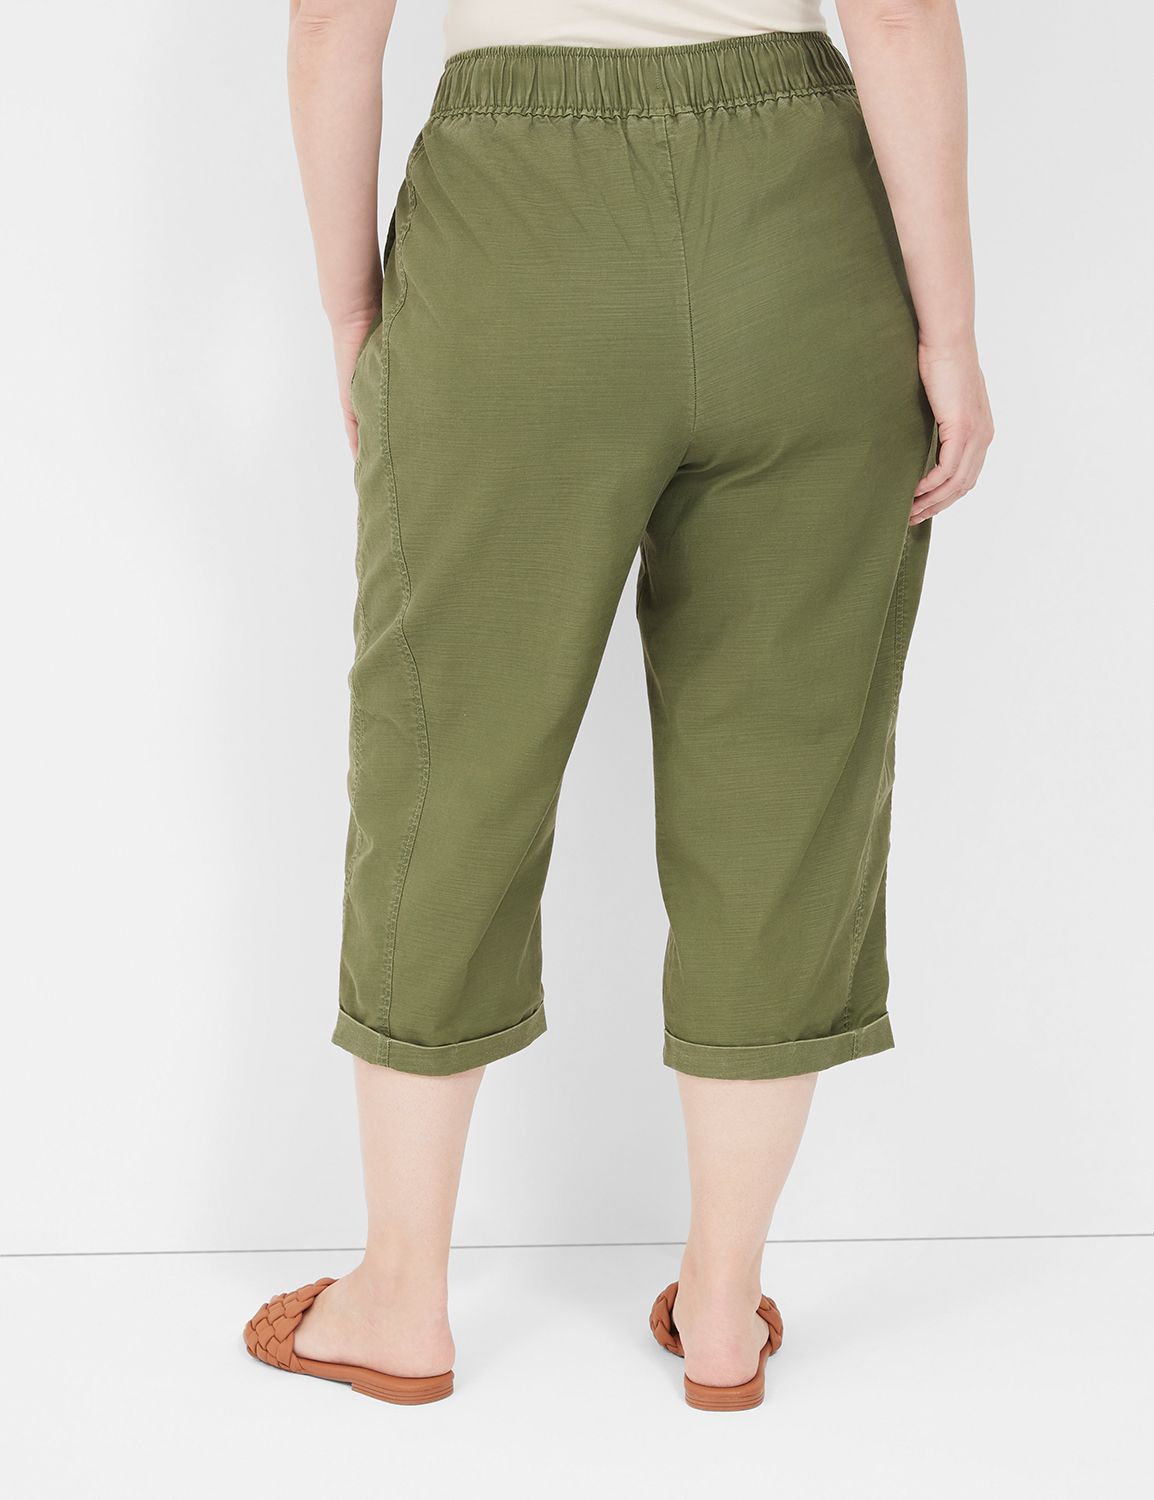 Cotton Linen Capri Pants for Women Drawstrinng Elastic Waist Knee Length  Bermuda Shorts Plus Size Wide Leg Yoga Cropped Pants